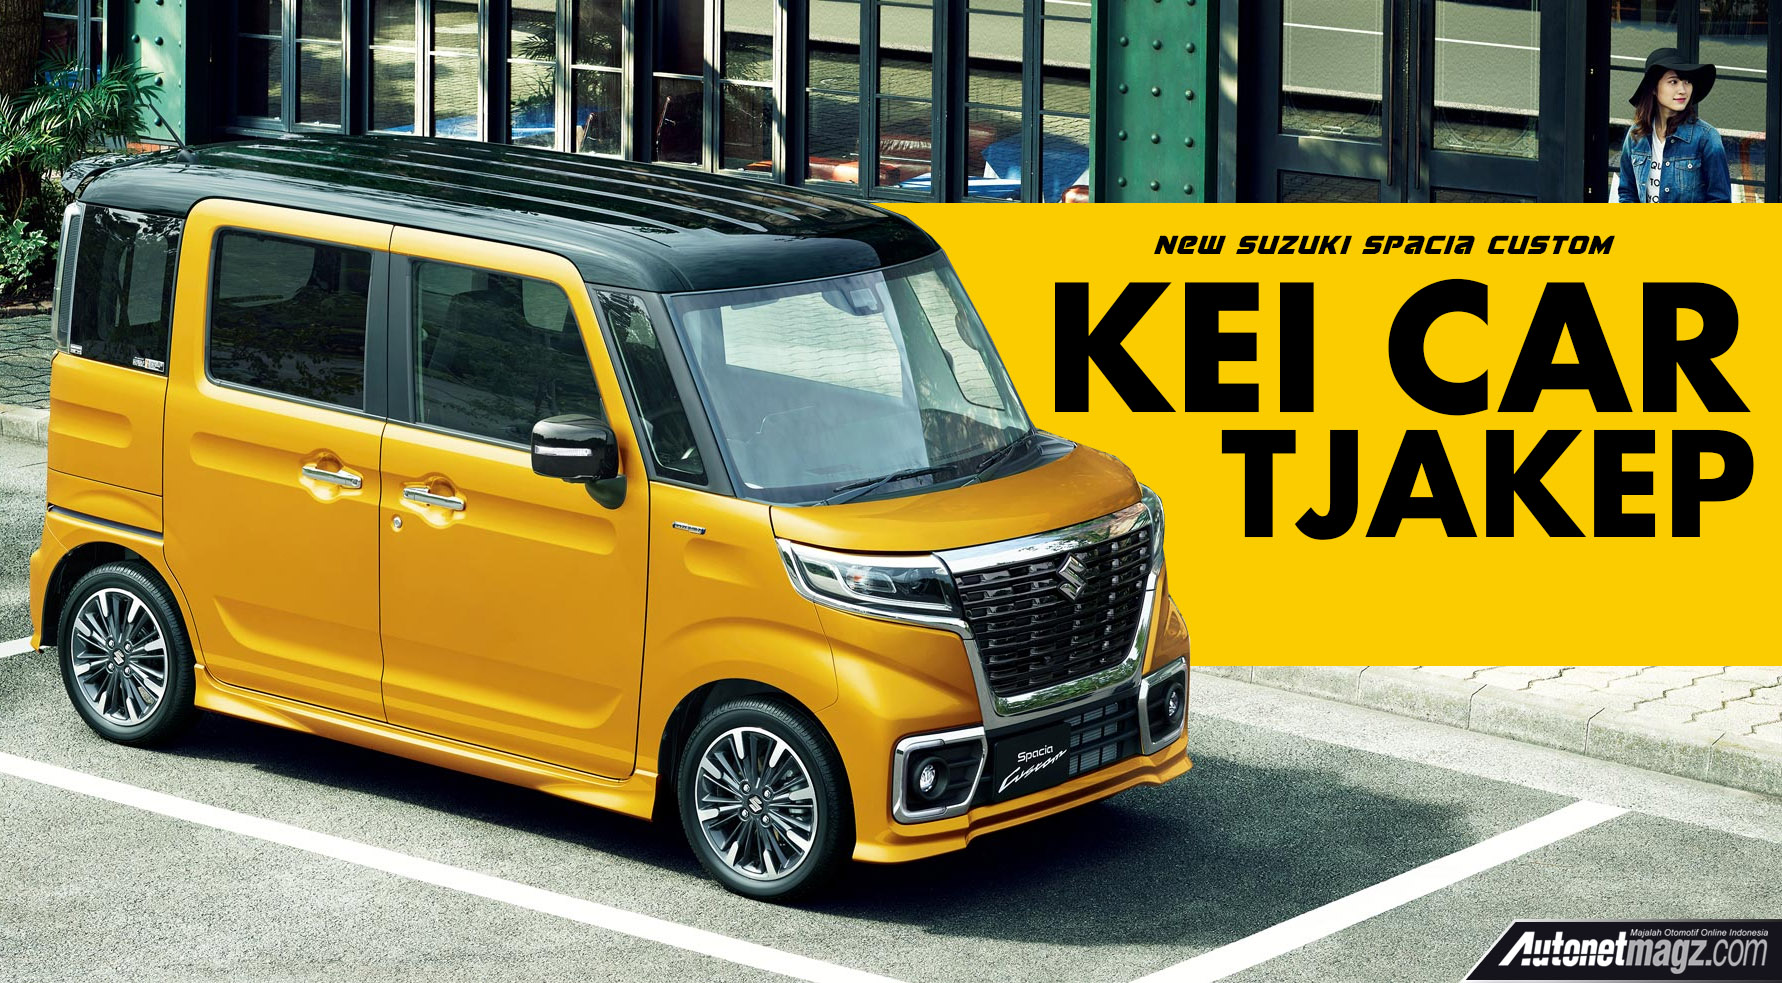 Berita, New Suzuki Spacia Custom cover: New Suzuki Spacia Custom Dirilis di Jepang, Kei Car Cakep